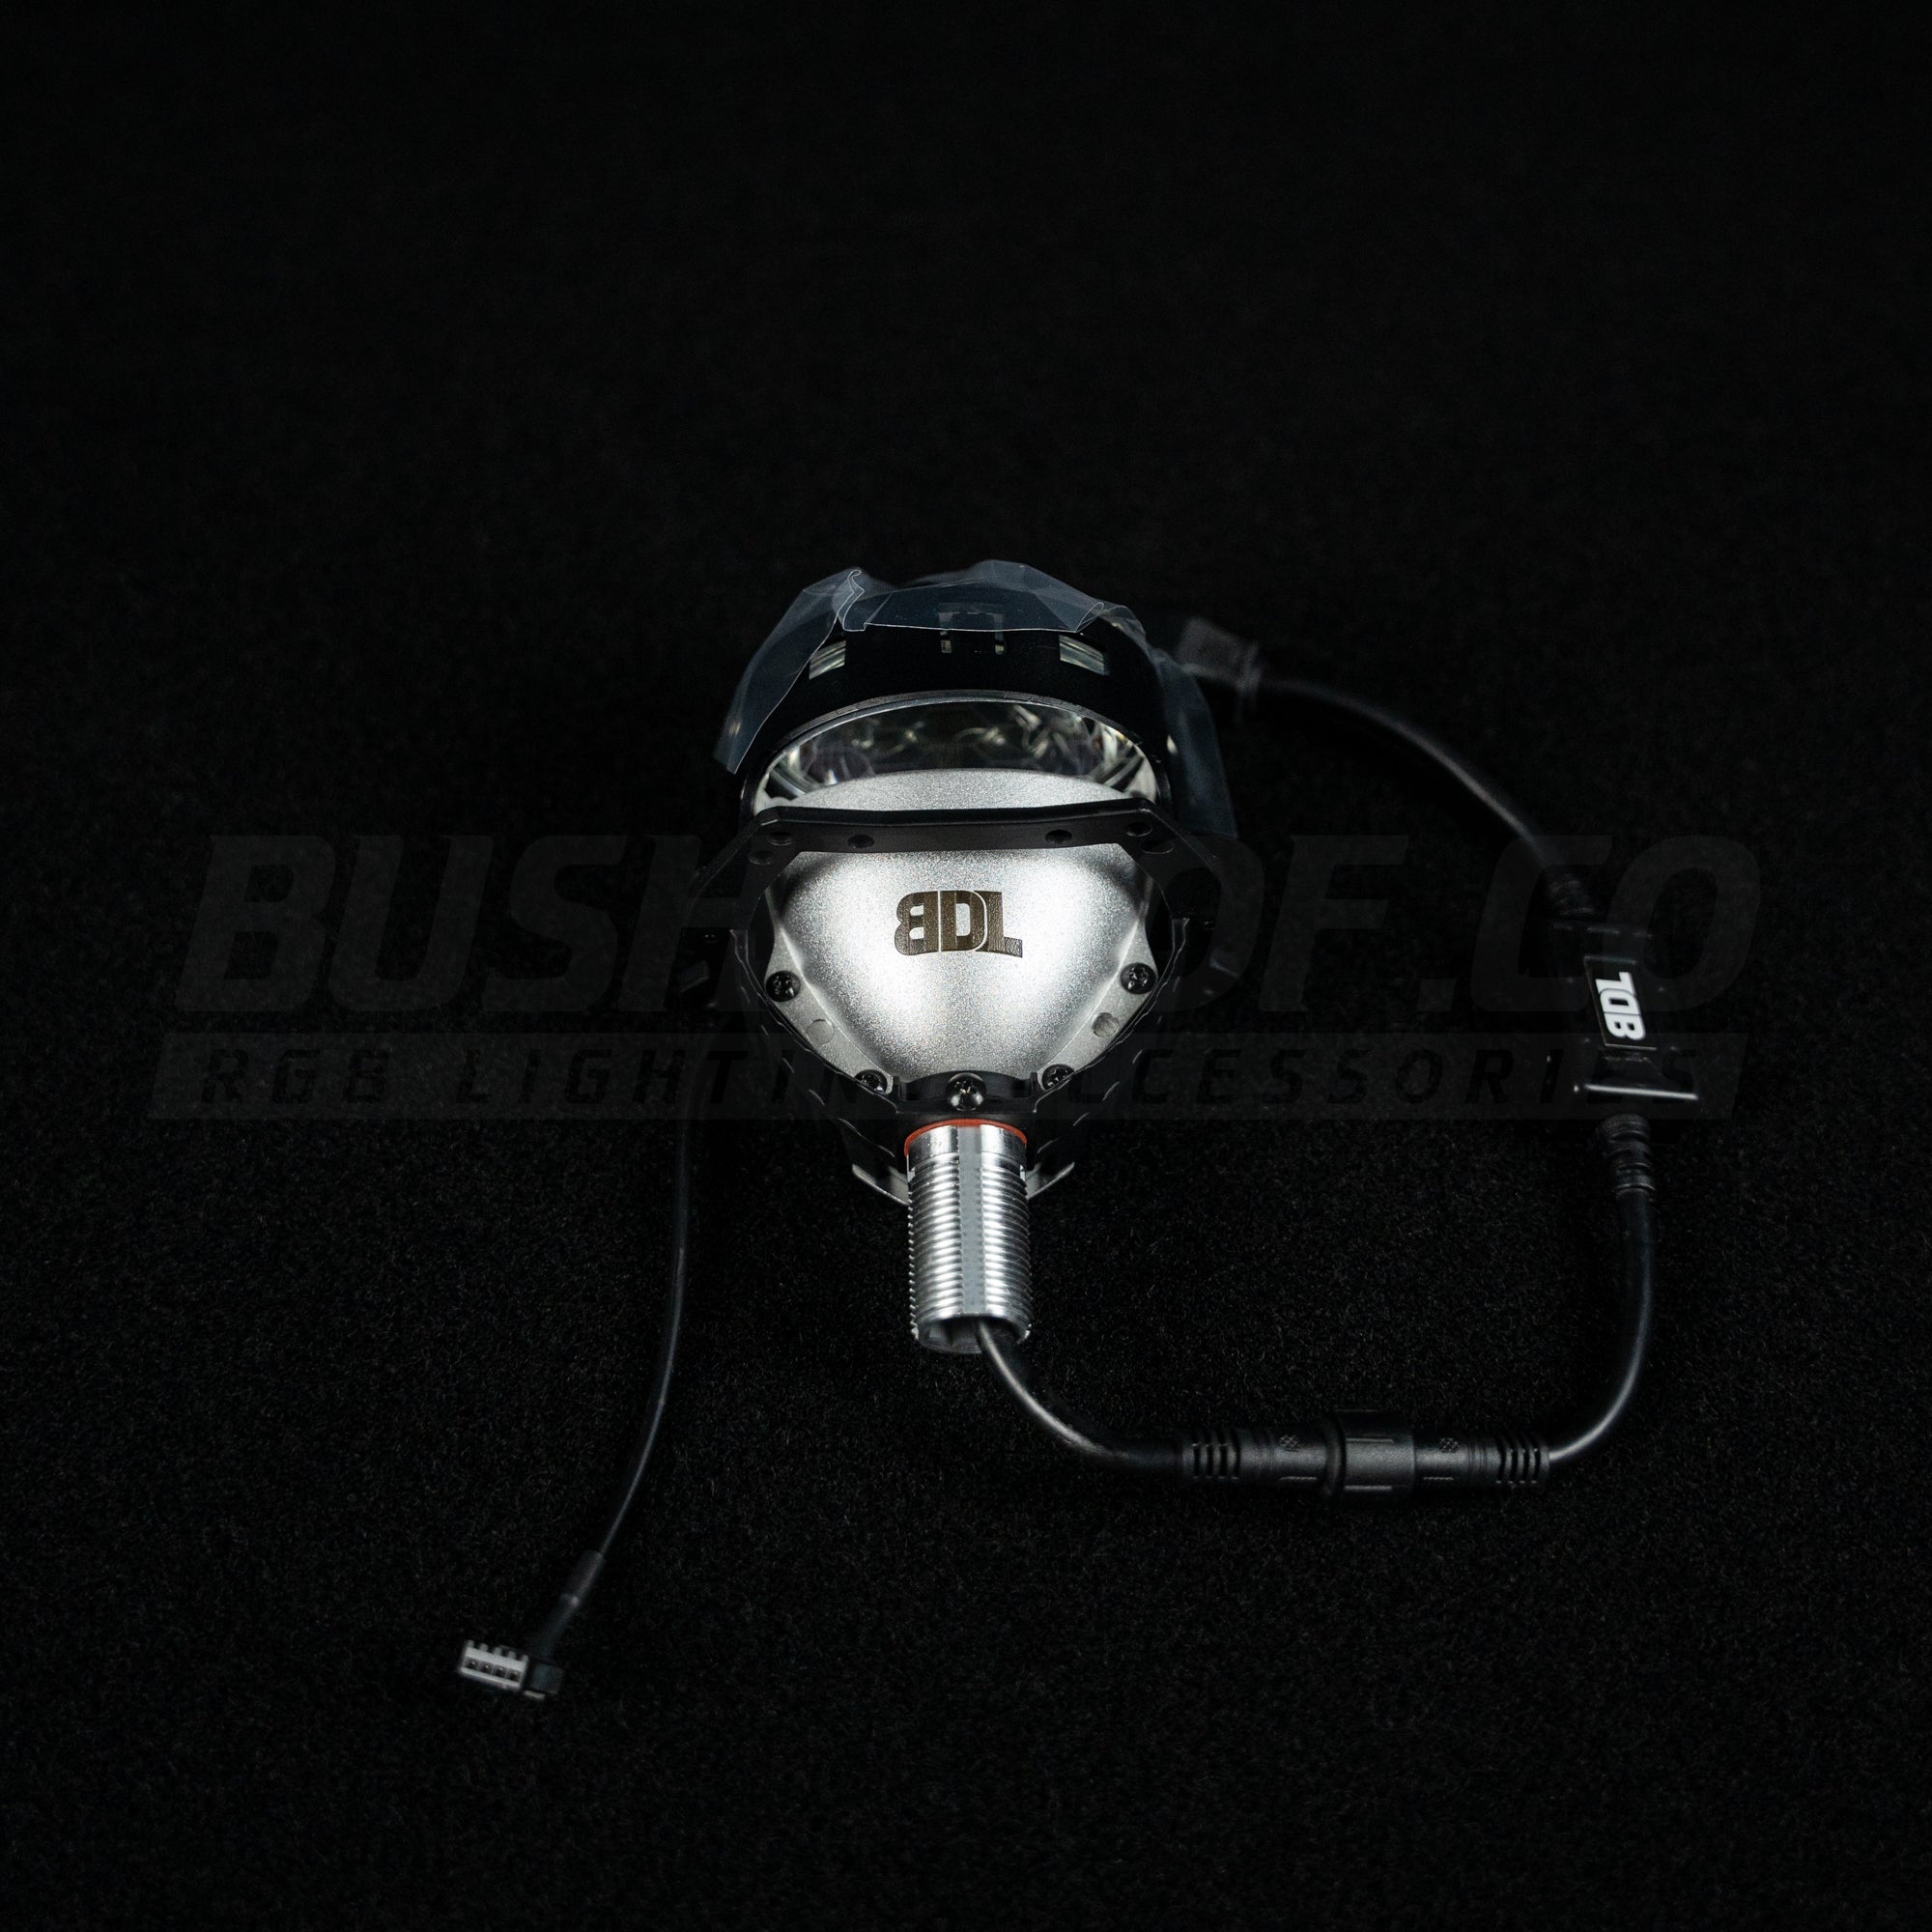 Bi-LED 'Turbine' Retrofit Headlight Kit - Bushdoof Lighting